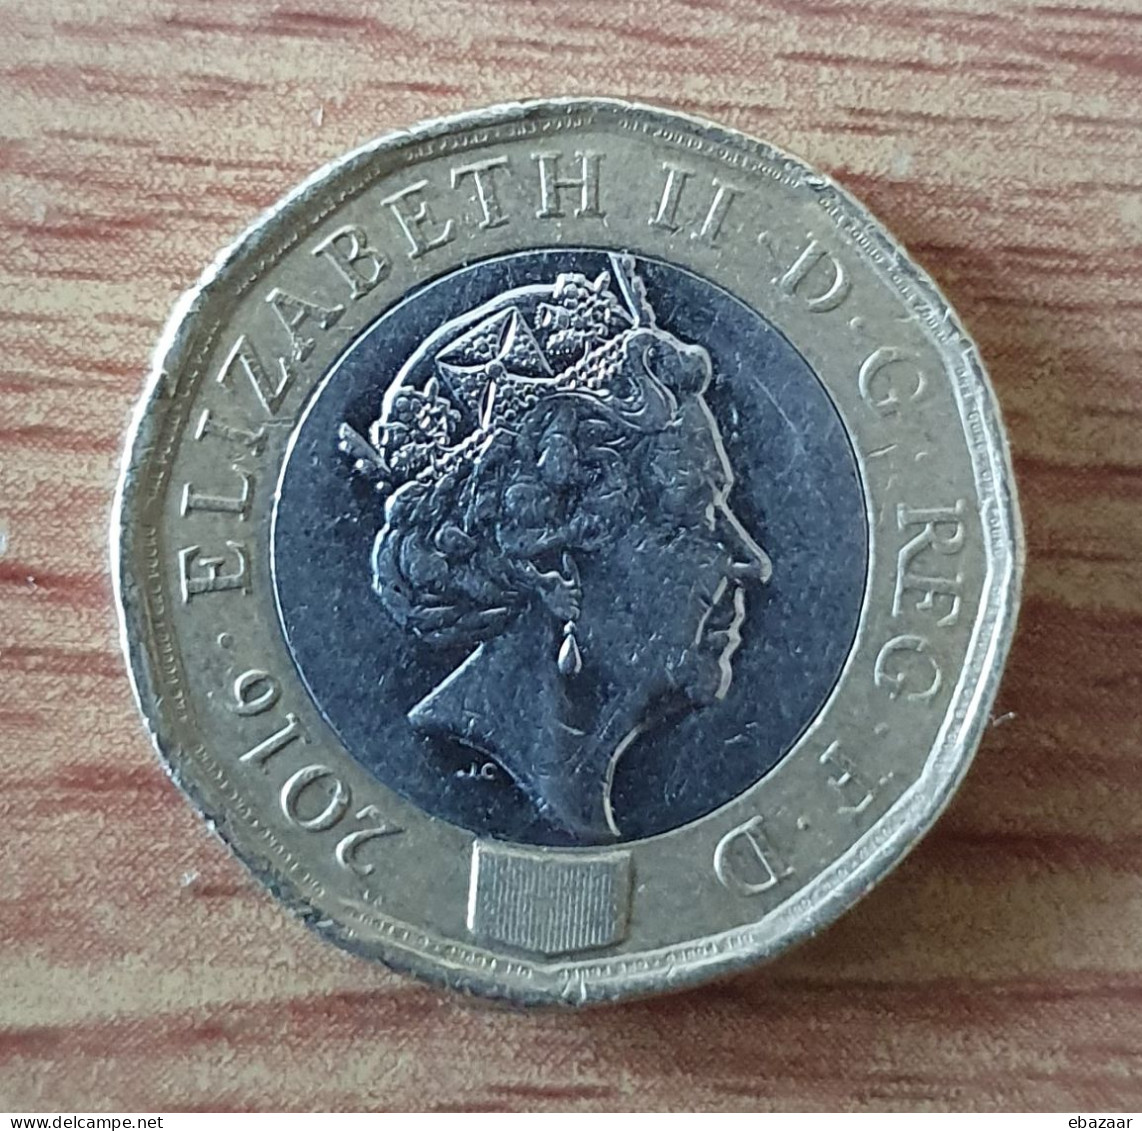 Great Britain 2016 United Kingdom Of England H.M. Queen Elizabeth II - One Pound Coin UK - 1 Pound